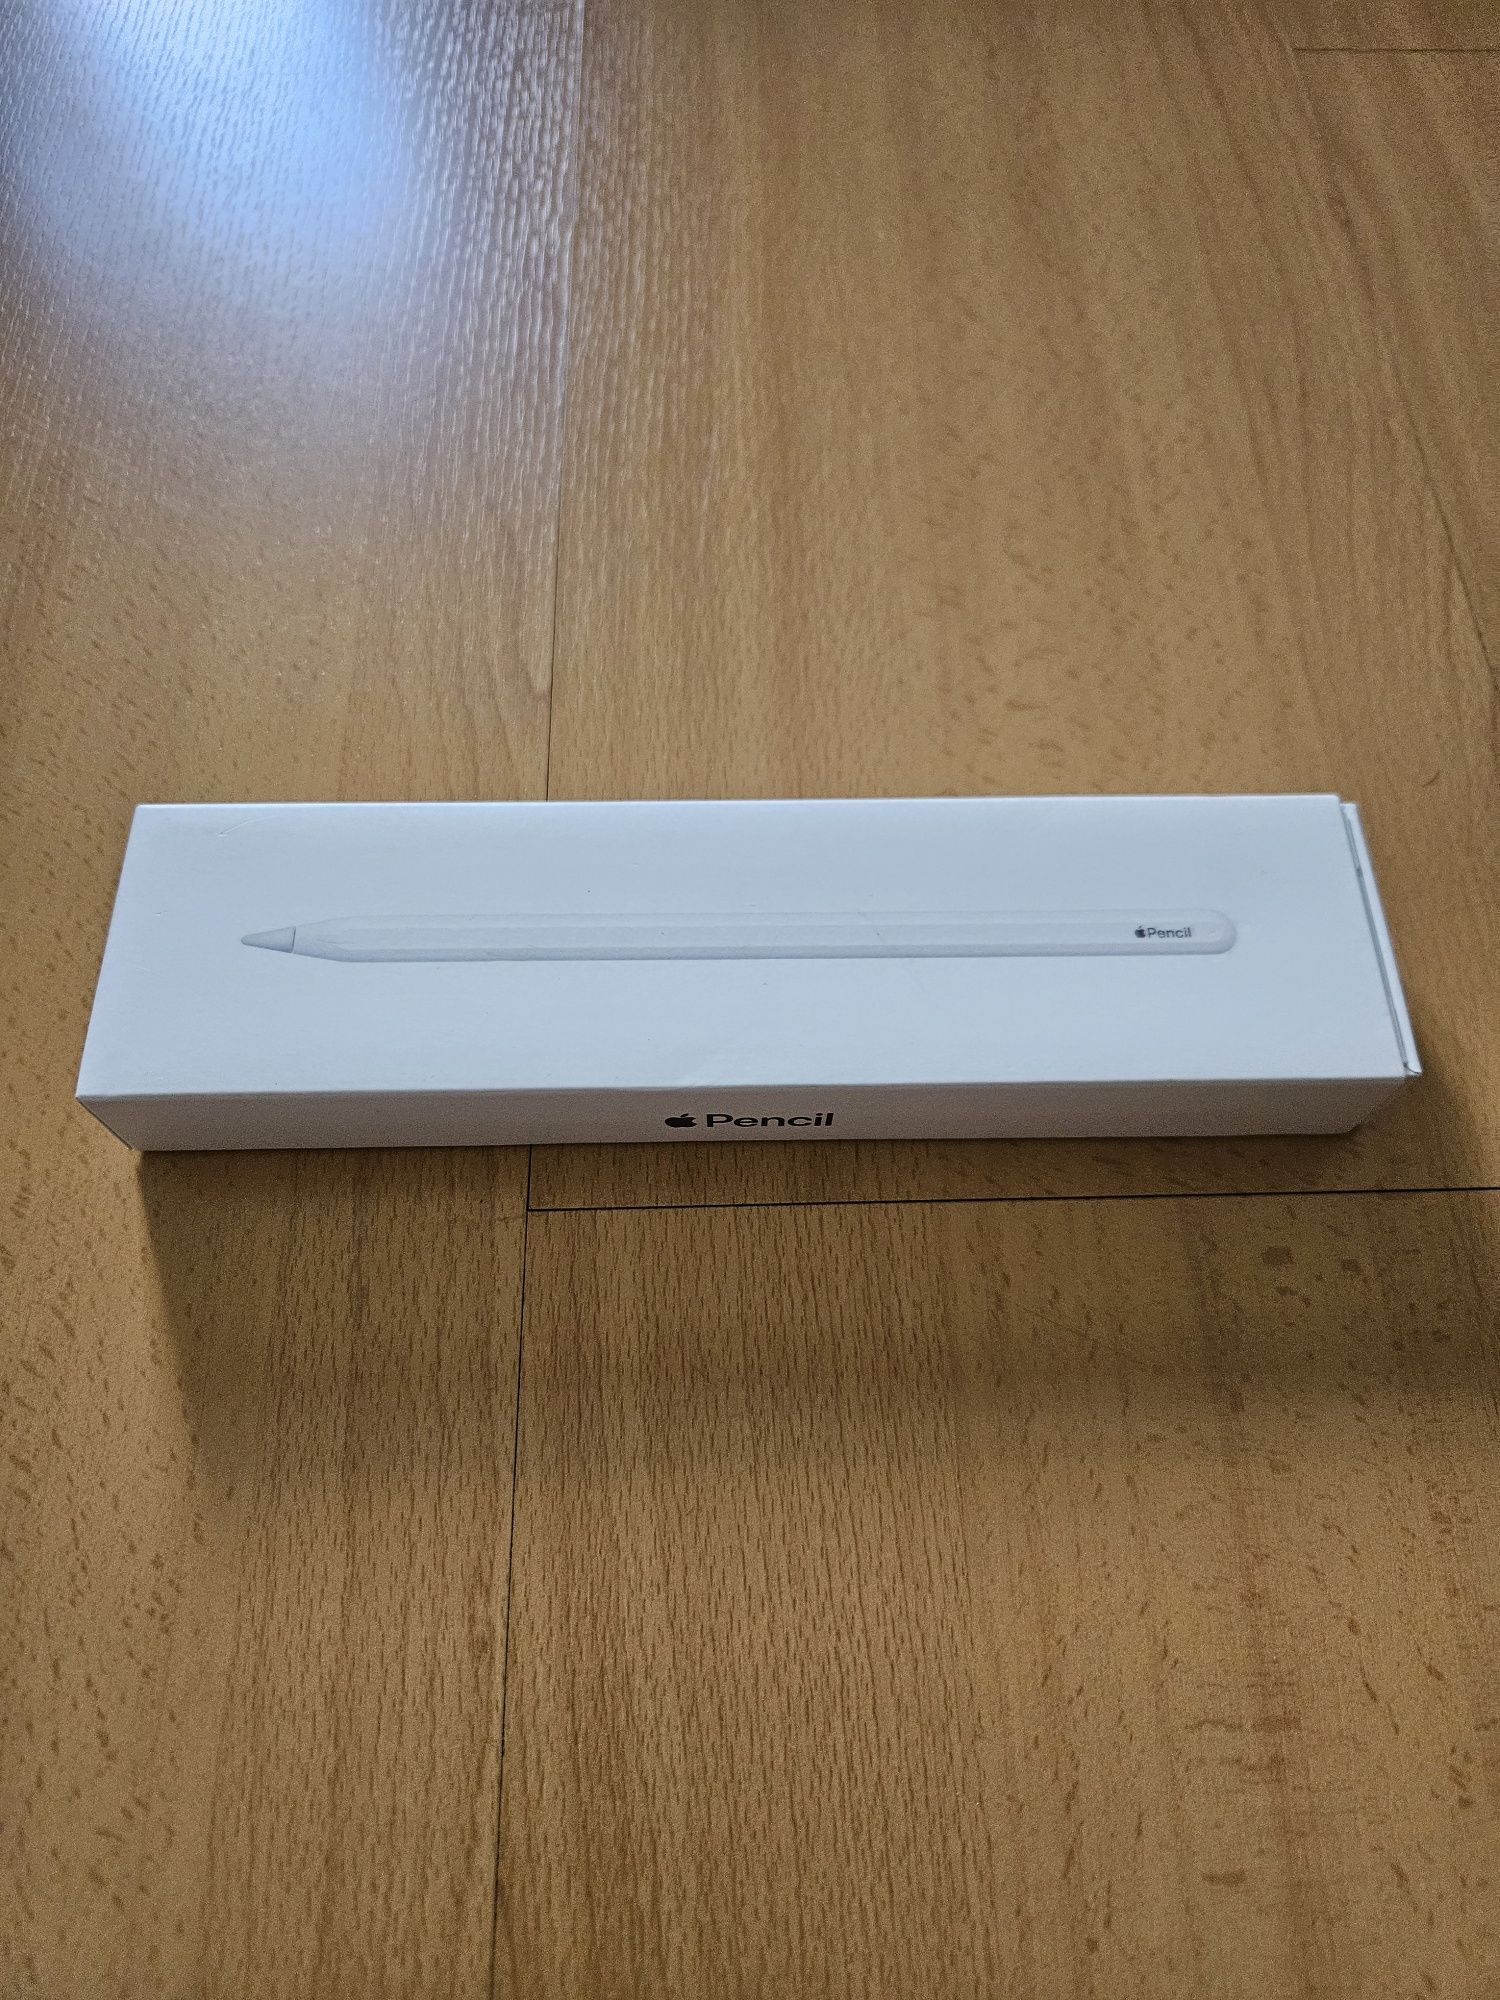 Apple Pencil 2 com caixa